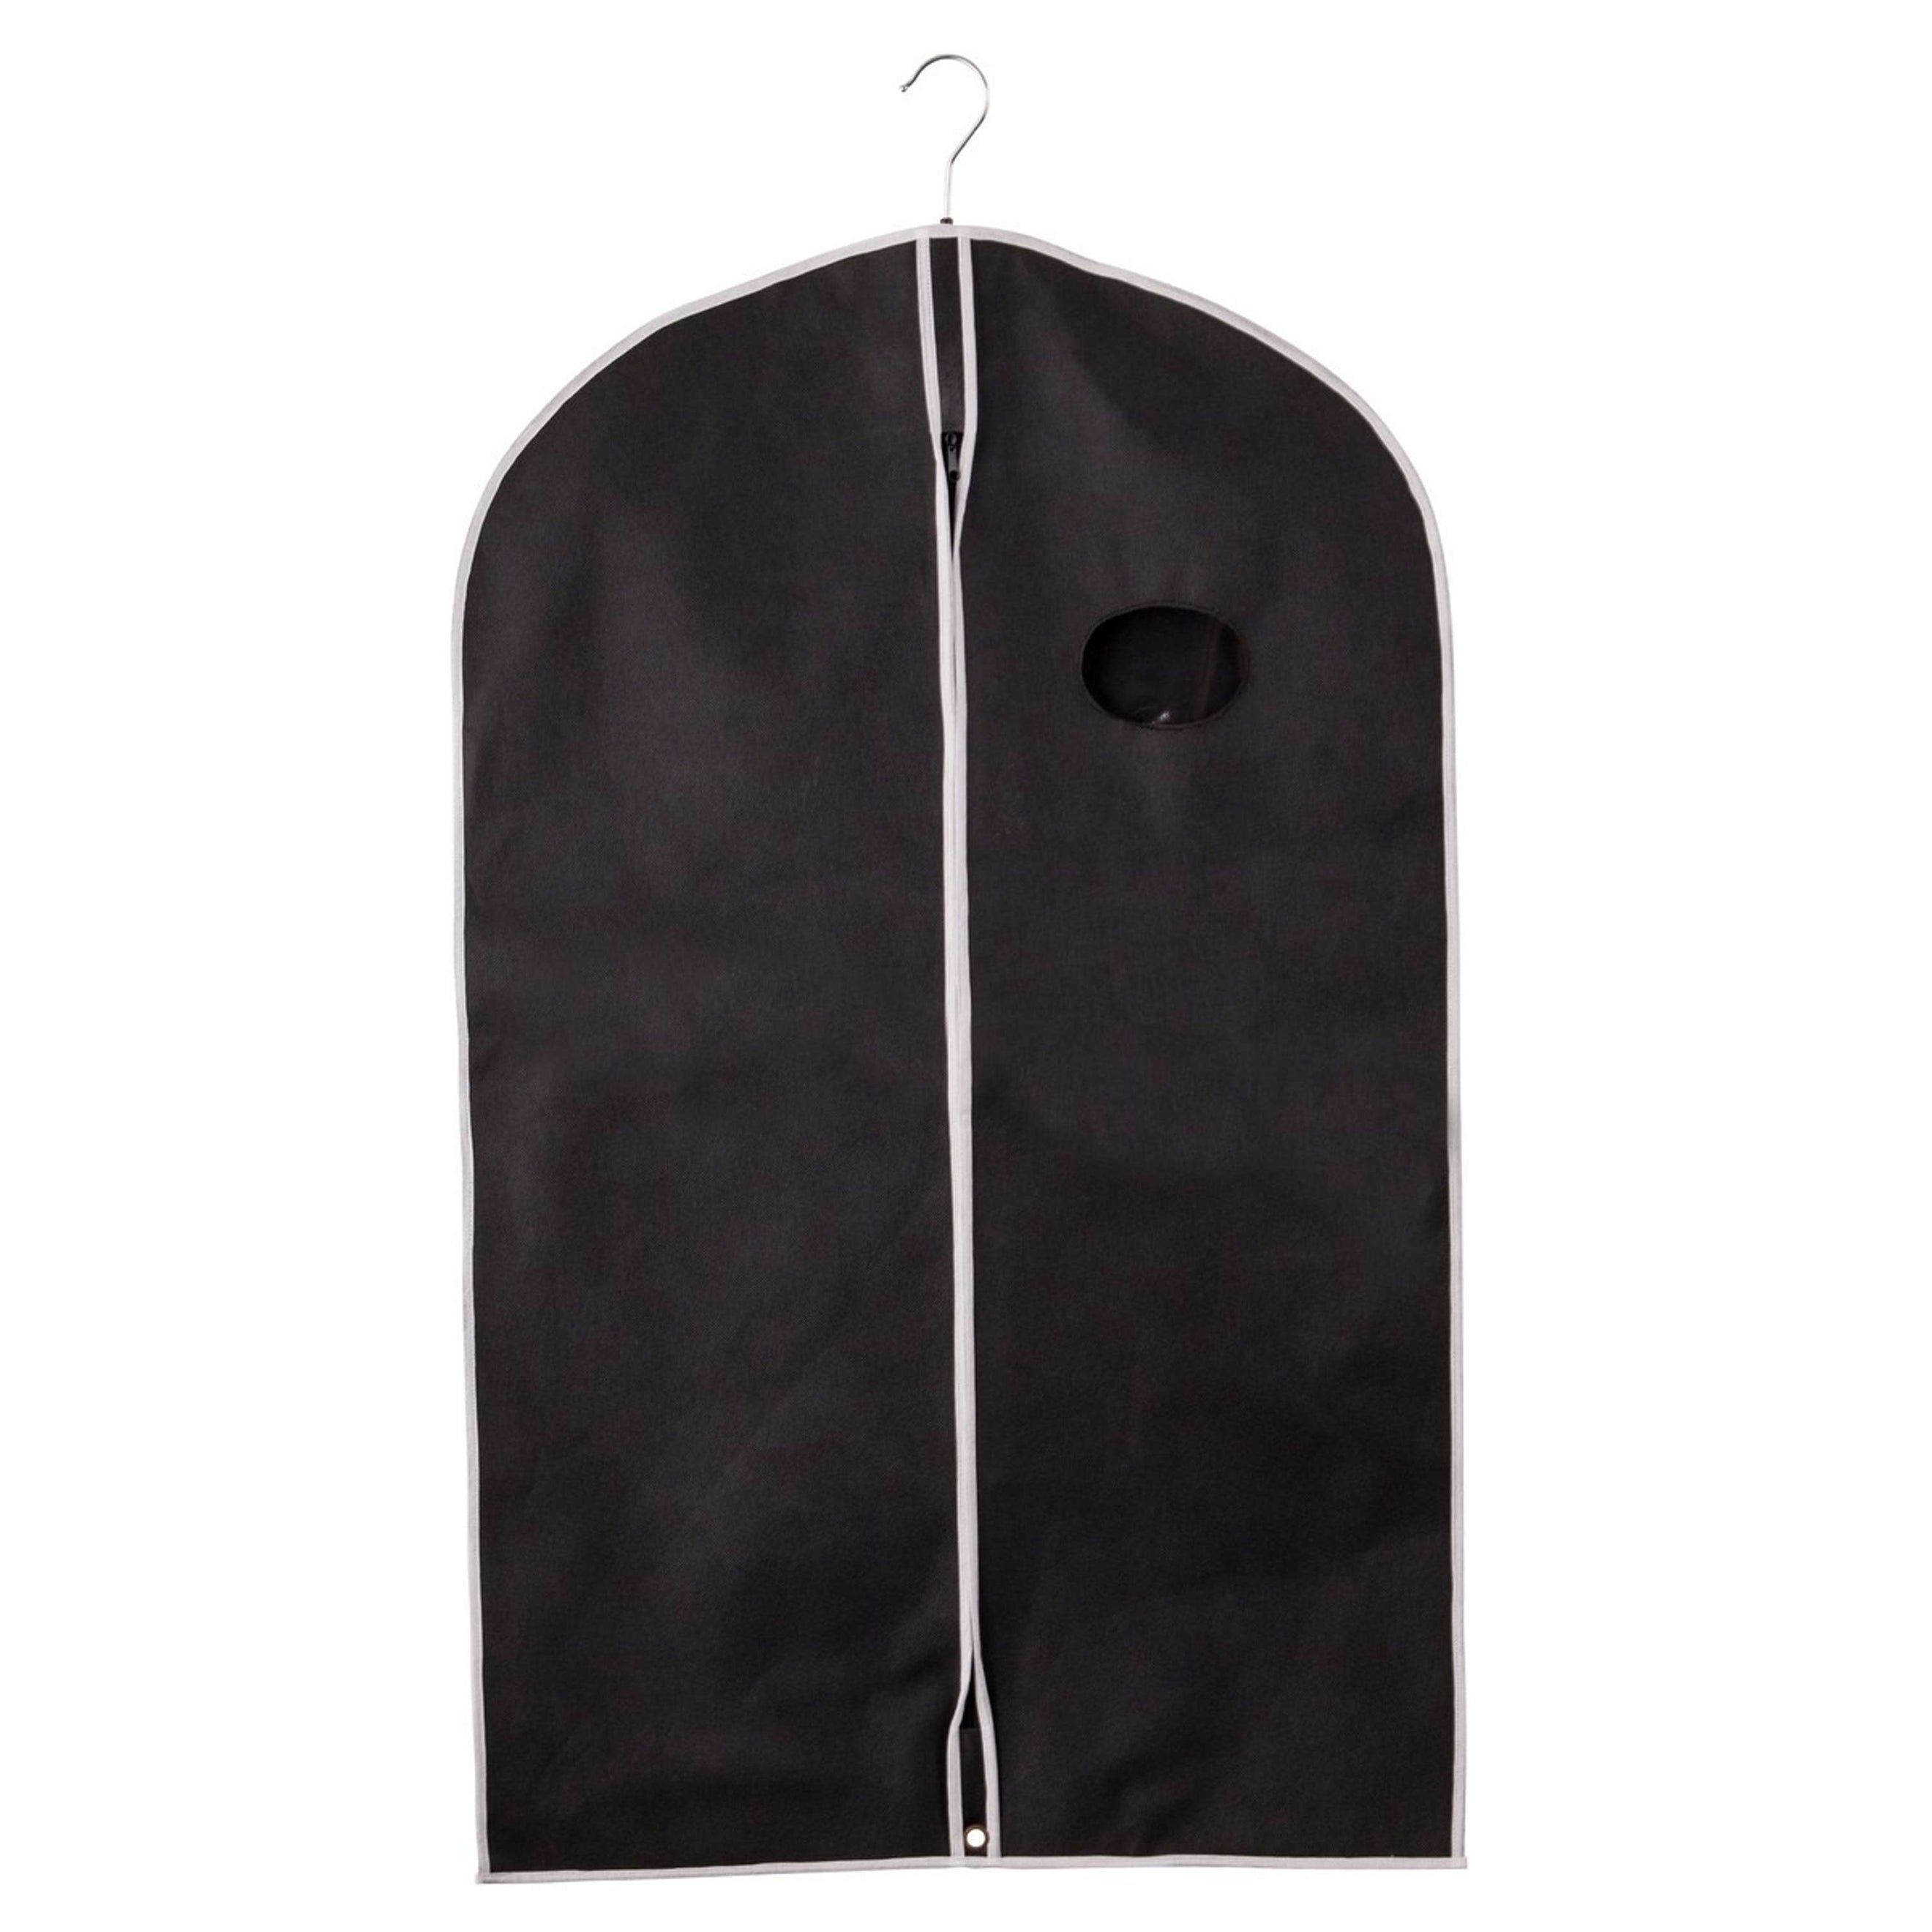 Anky Sac Porte-Costume C-Wear Noir